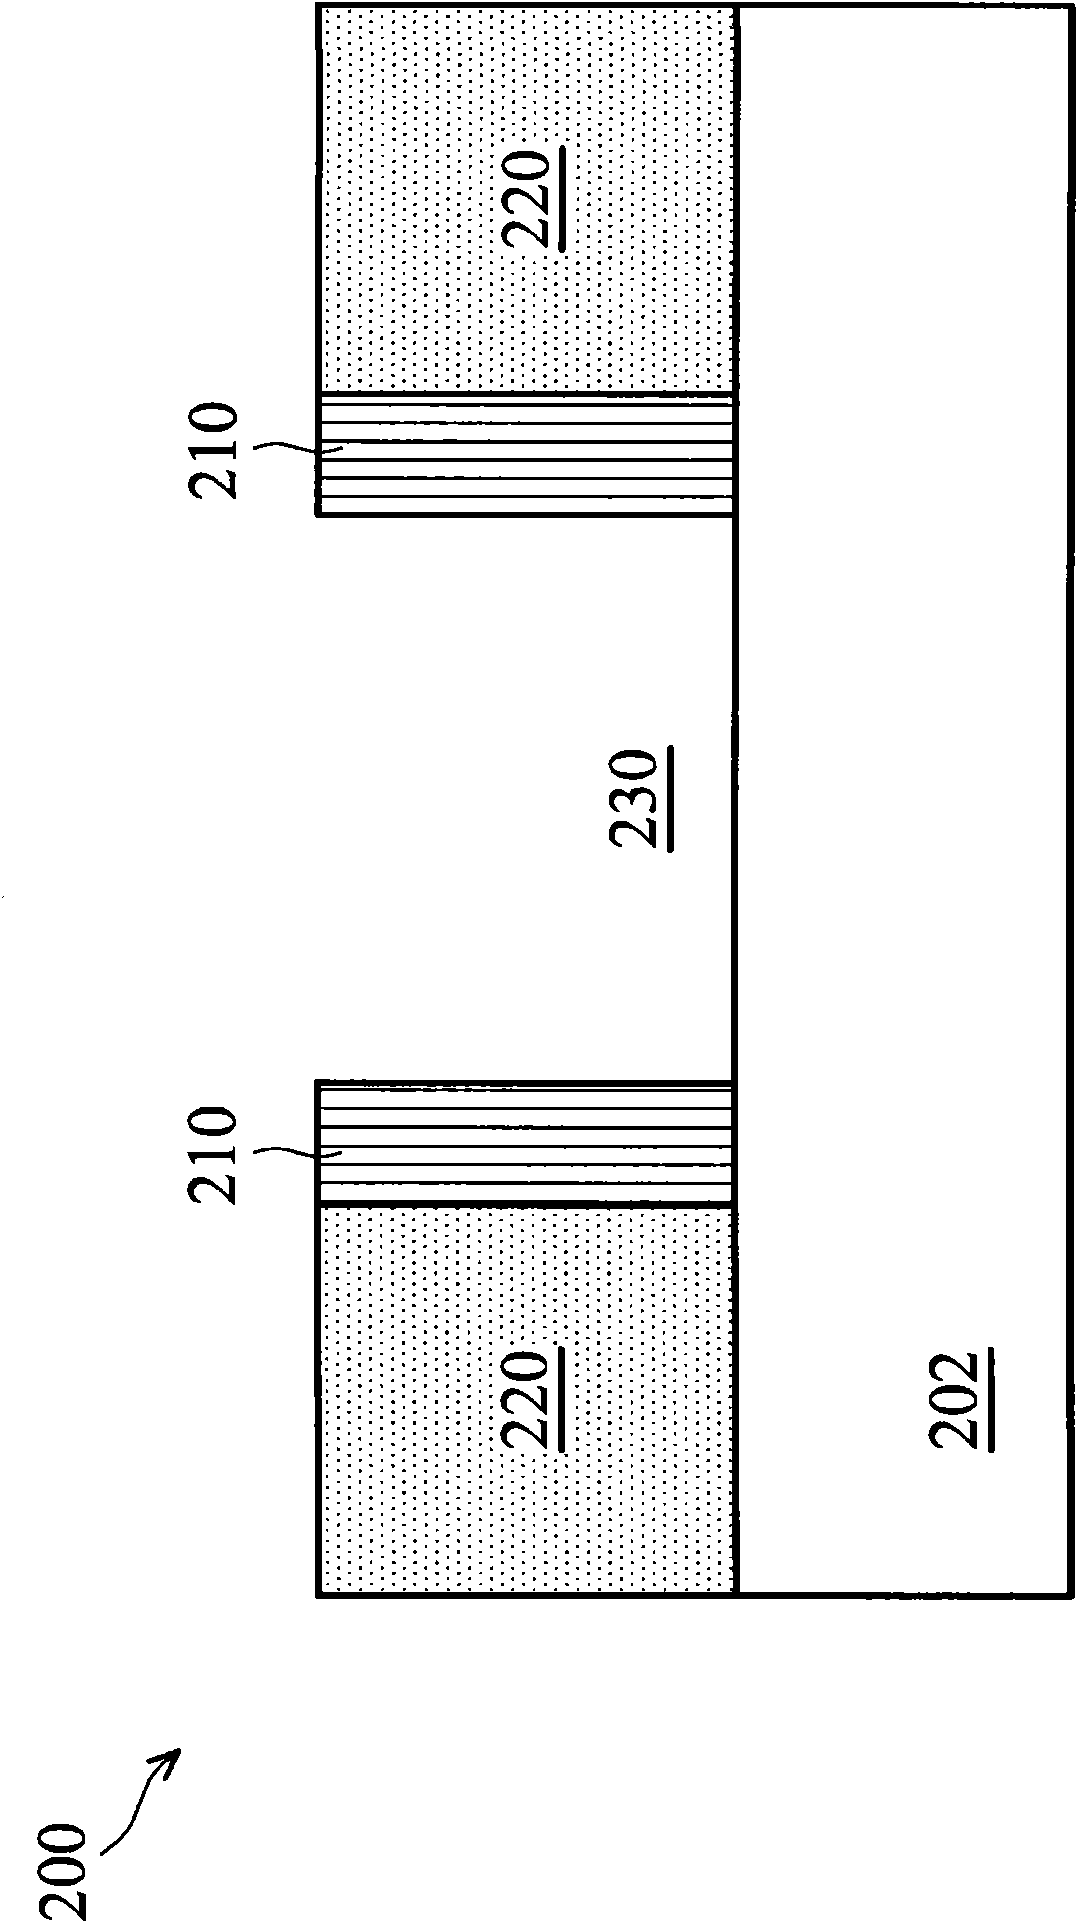 Method of fabricating high-k/metal gate device